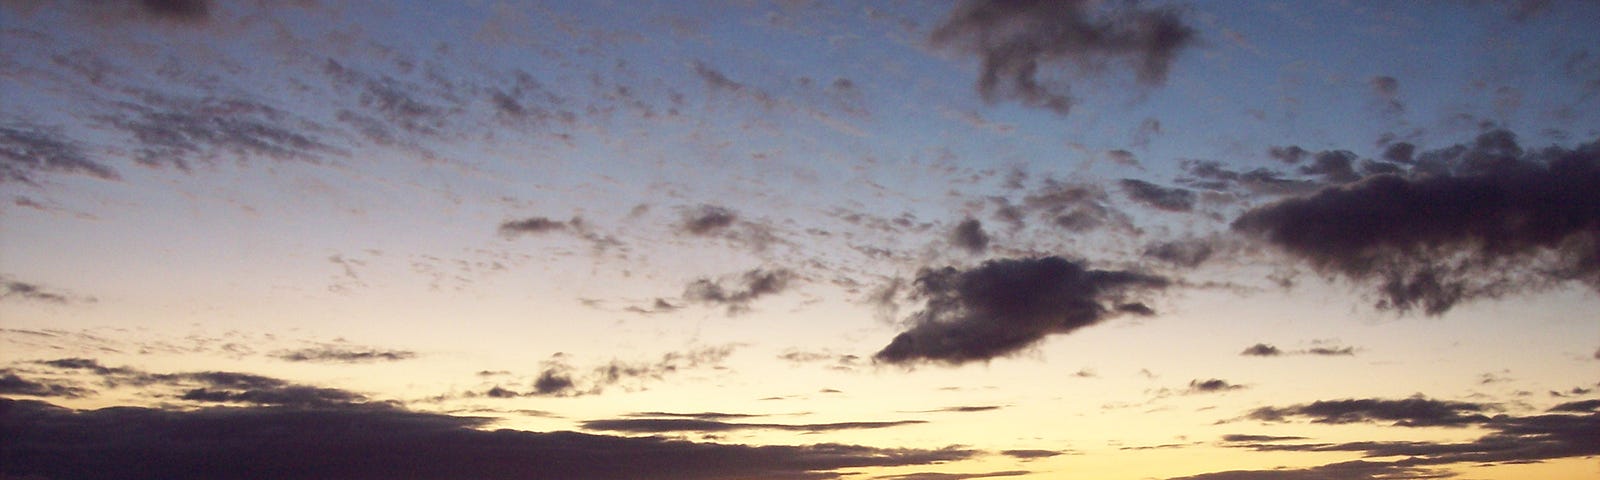 Image of a Hawaiian sunset